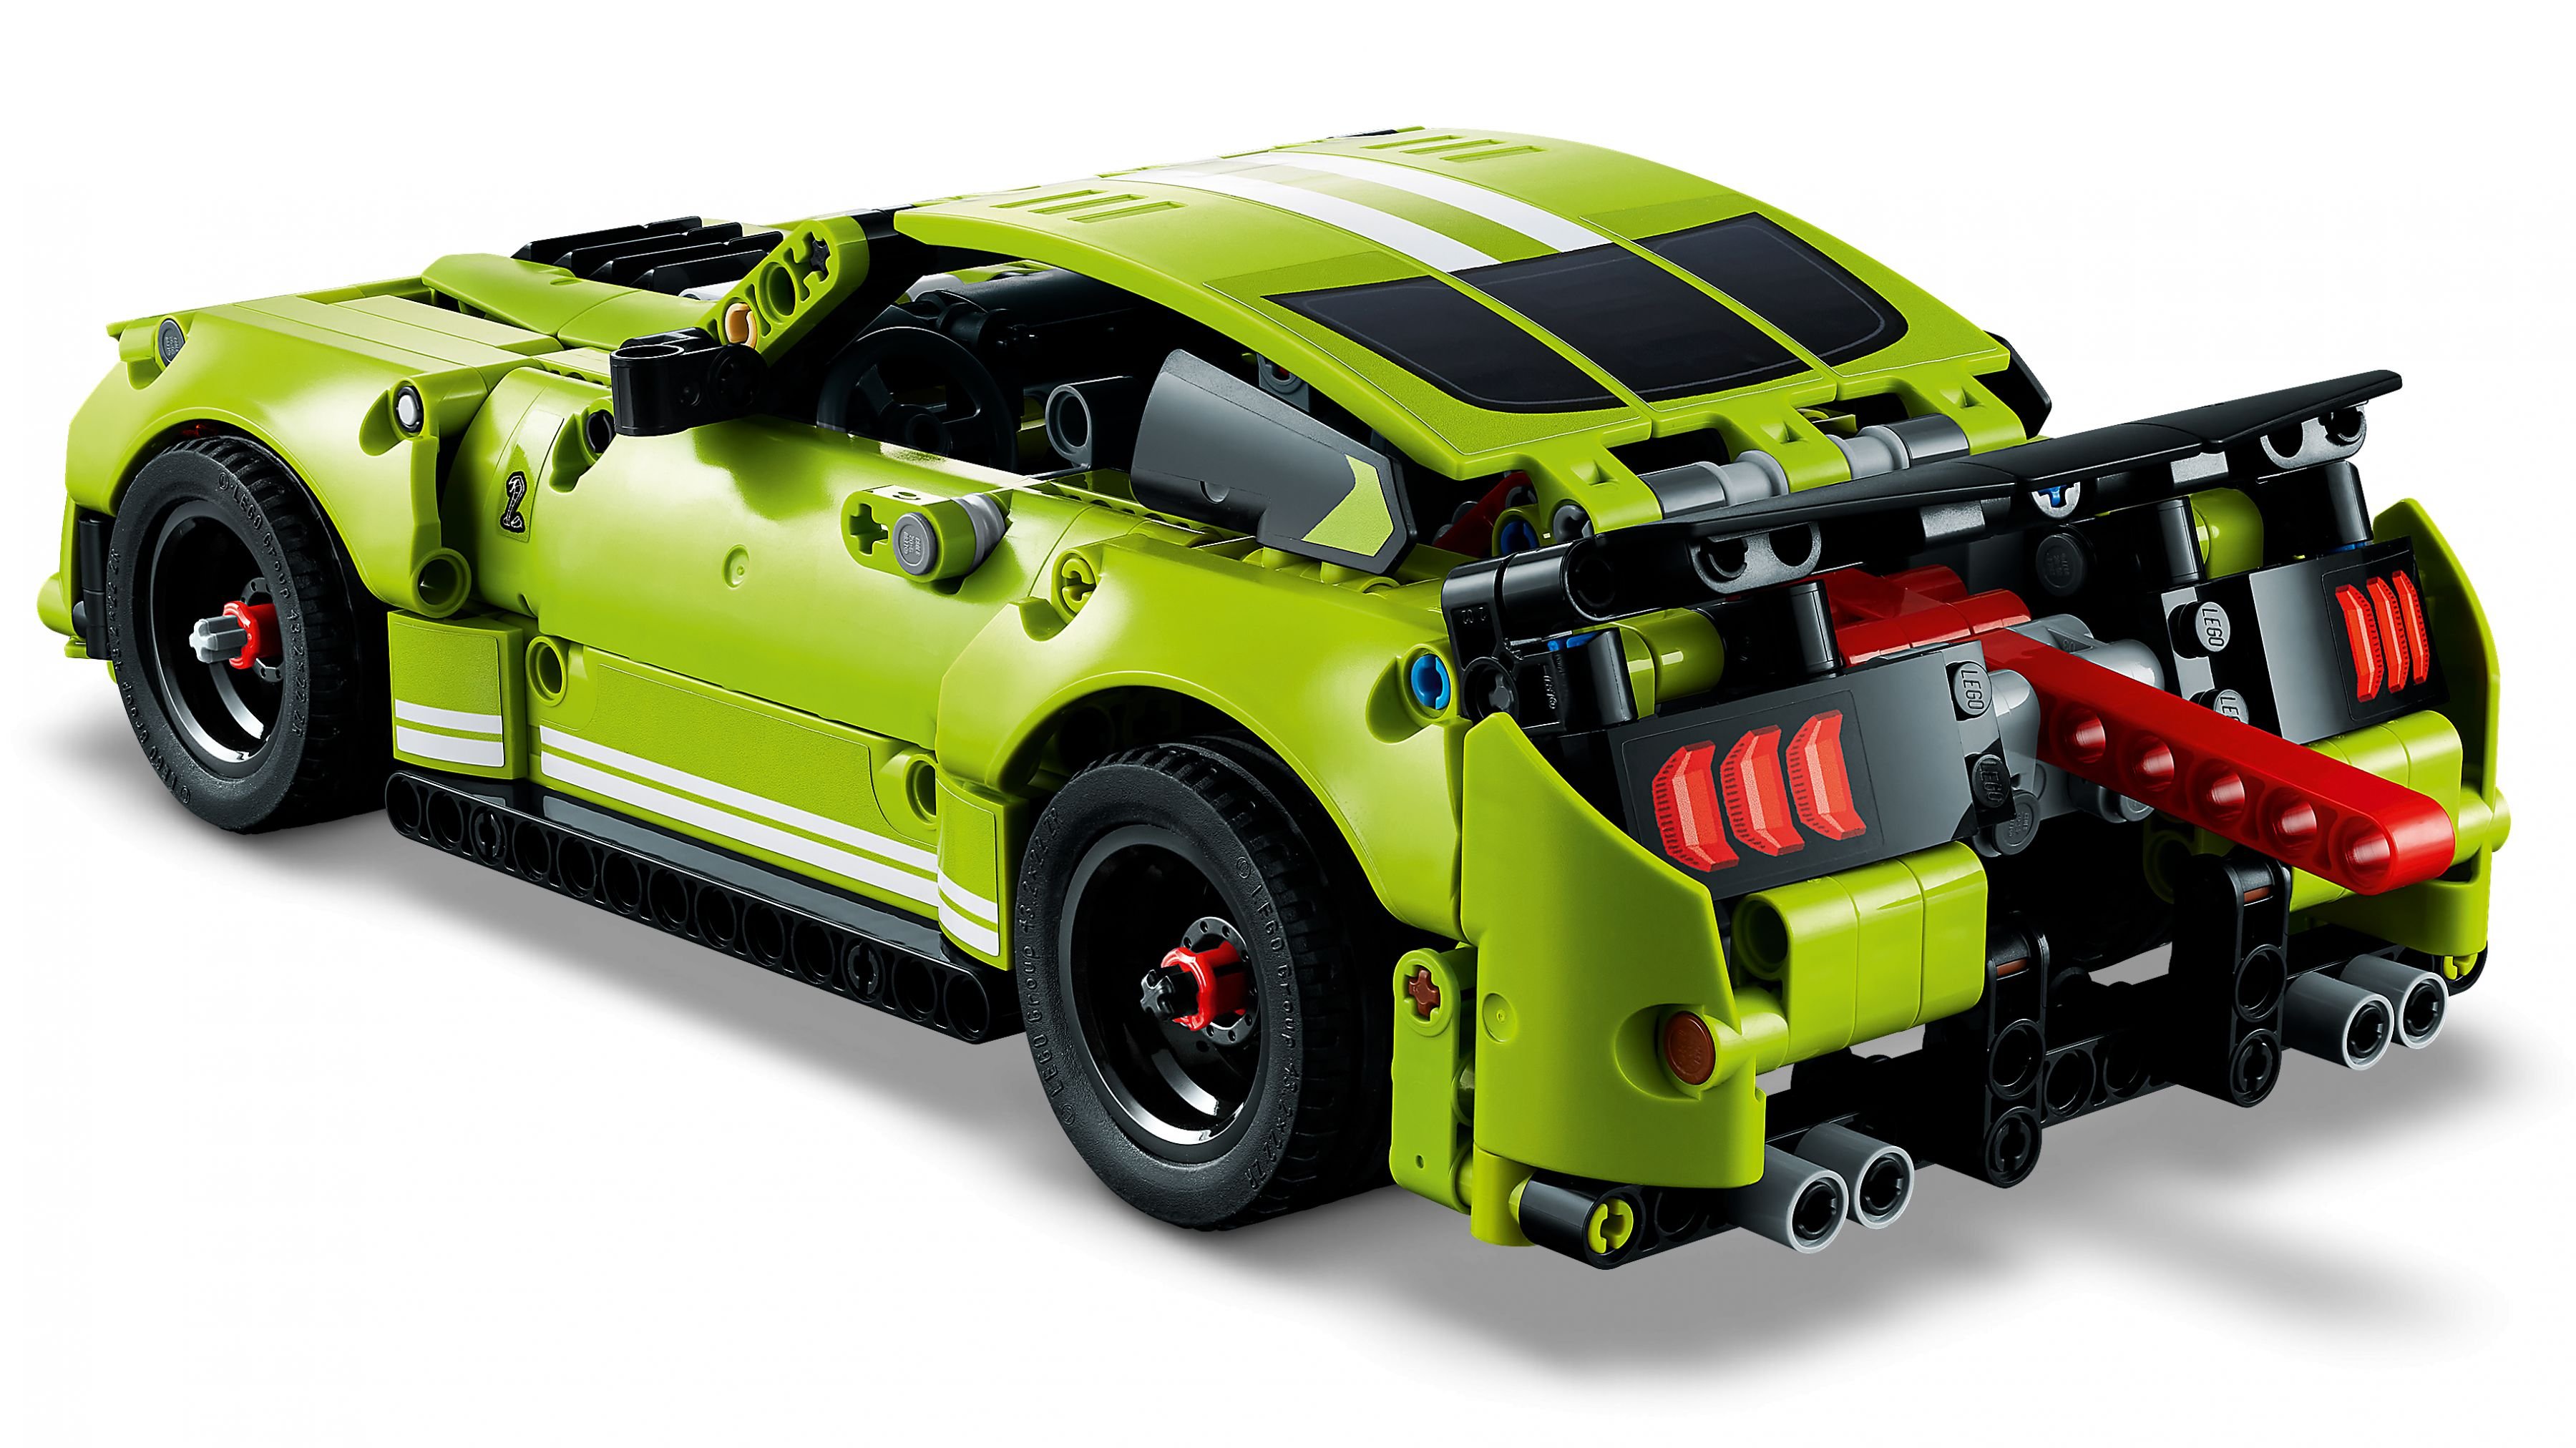 LEGO Technic 42138 Mustang Shelby Cobra LEGO_42138_WEB_SEC04_NOBG.jpg